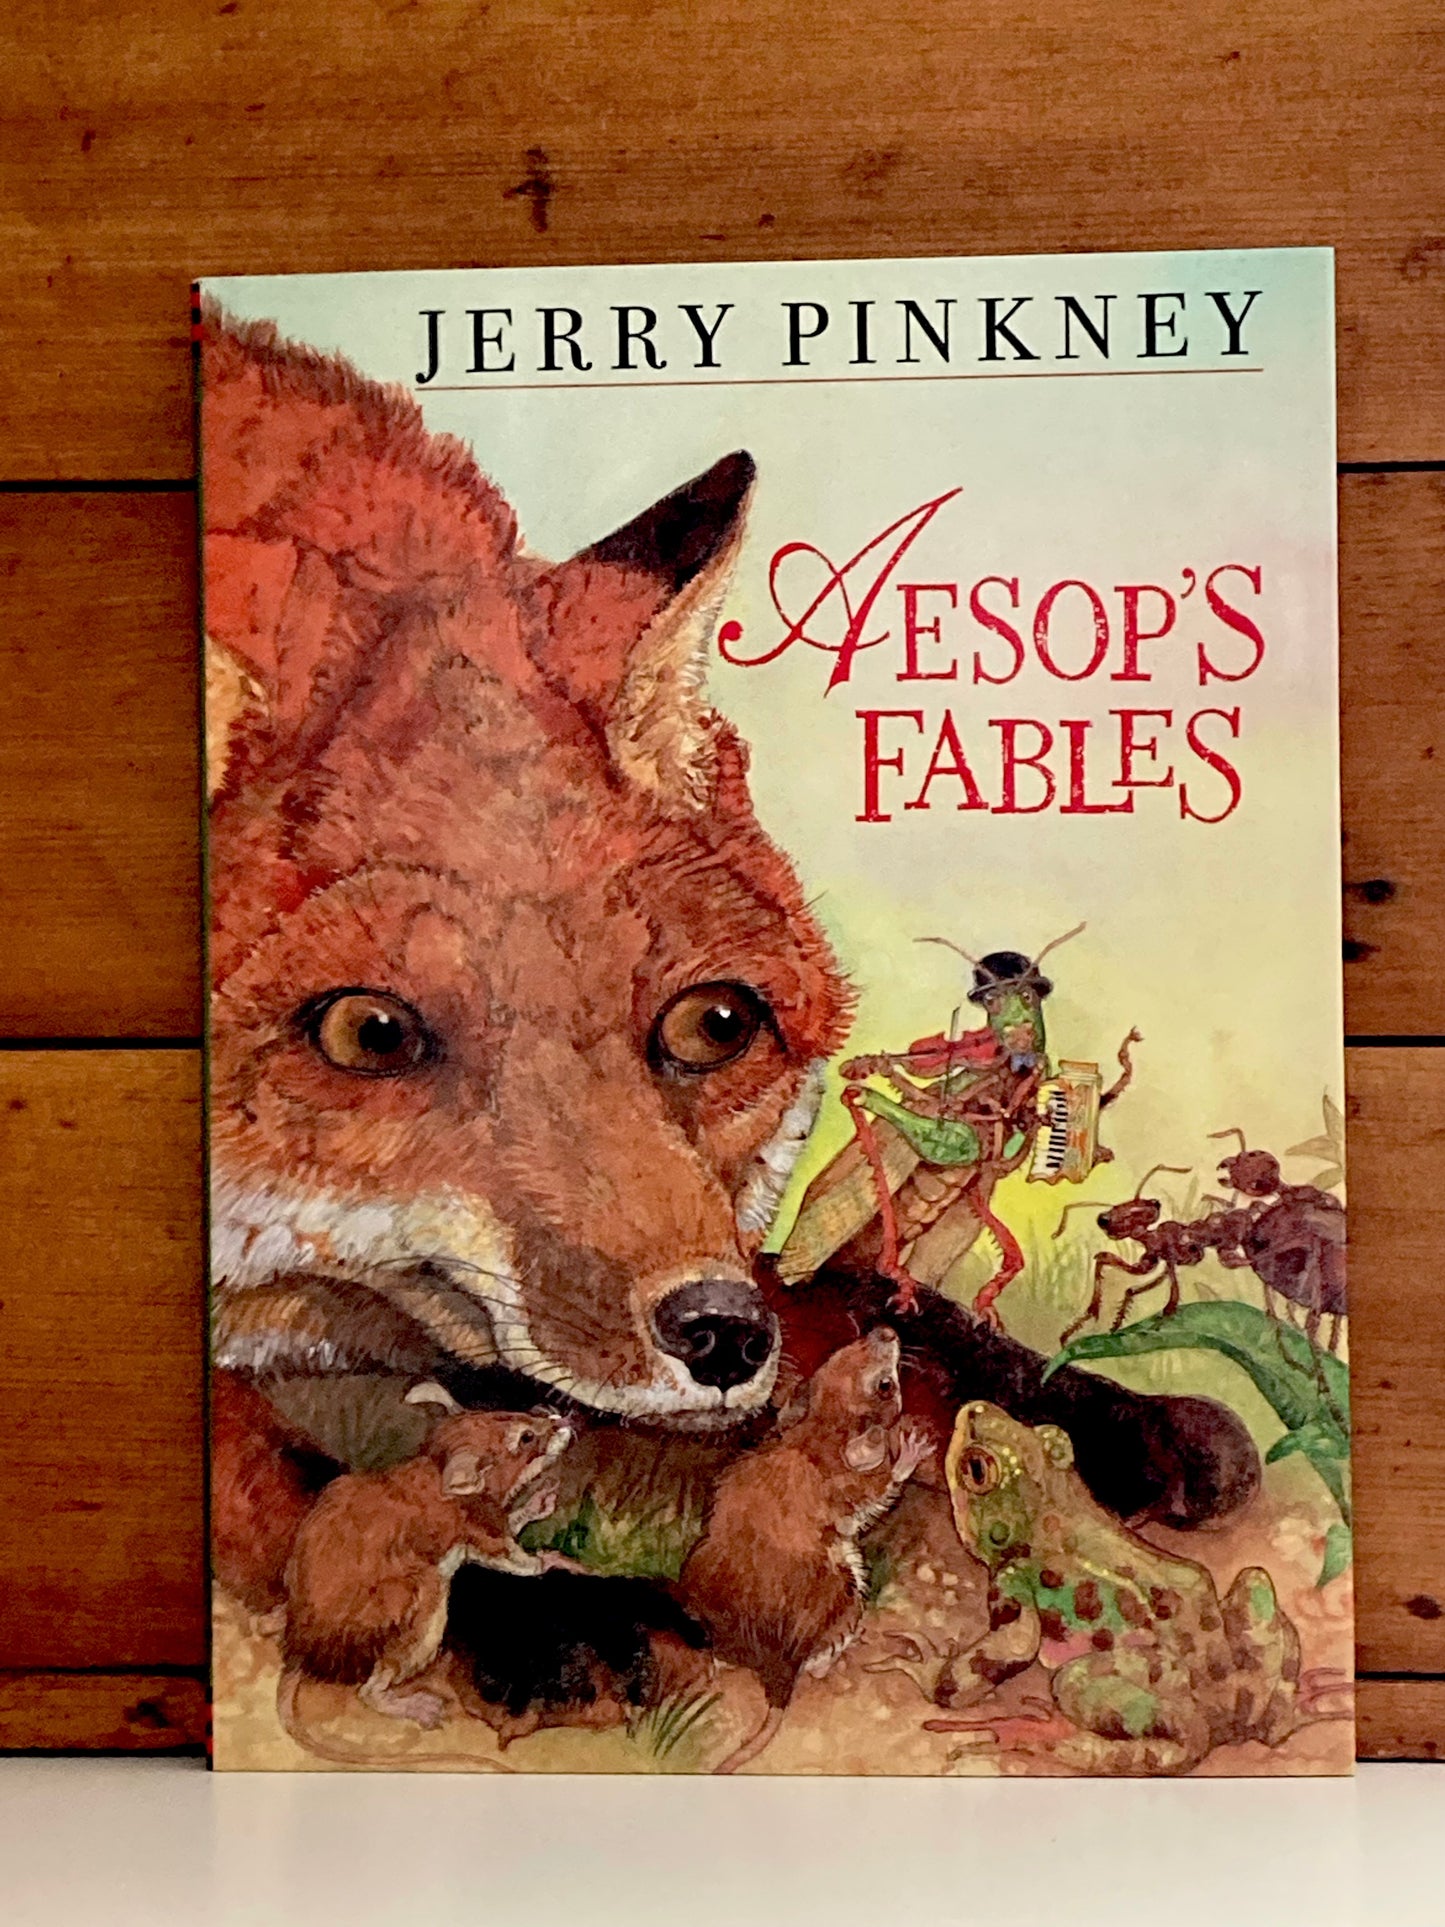 Children's Fables, Folk & Fairy Tales - AESOP'S FABLES